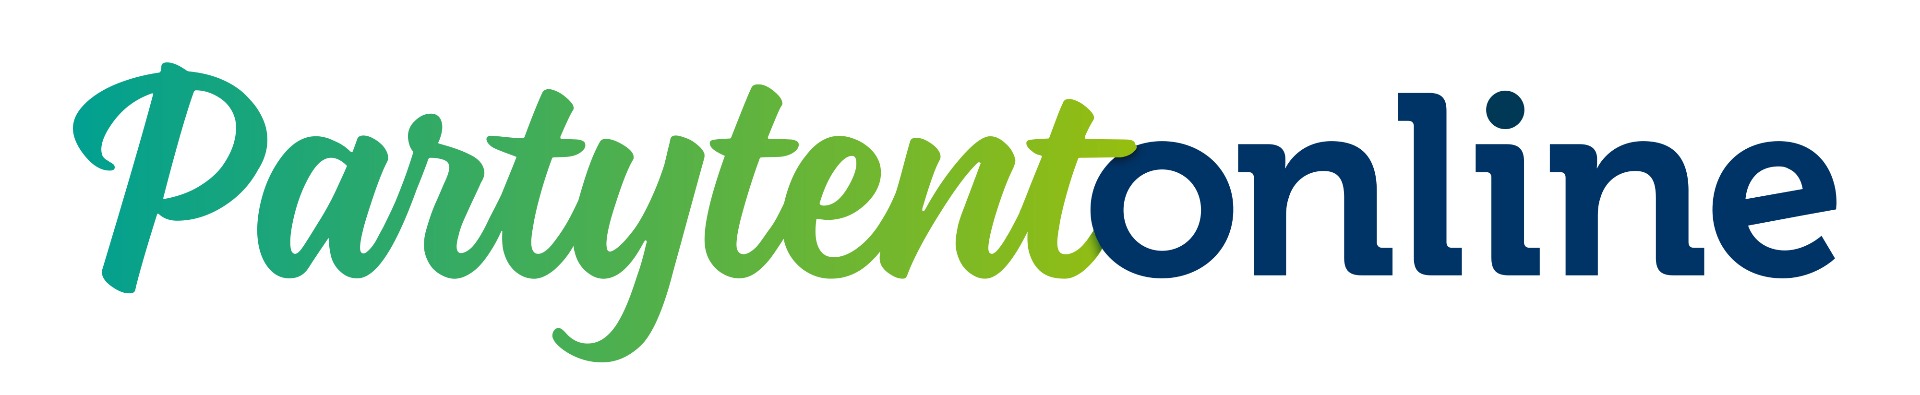 Partytent-online logo